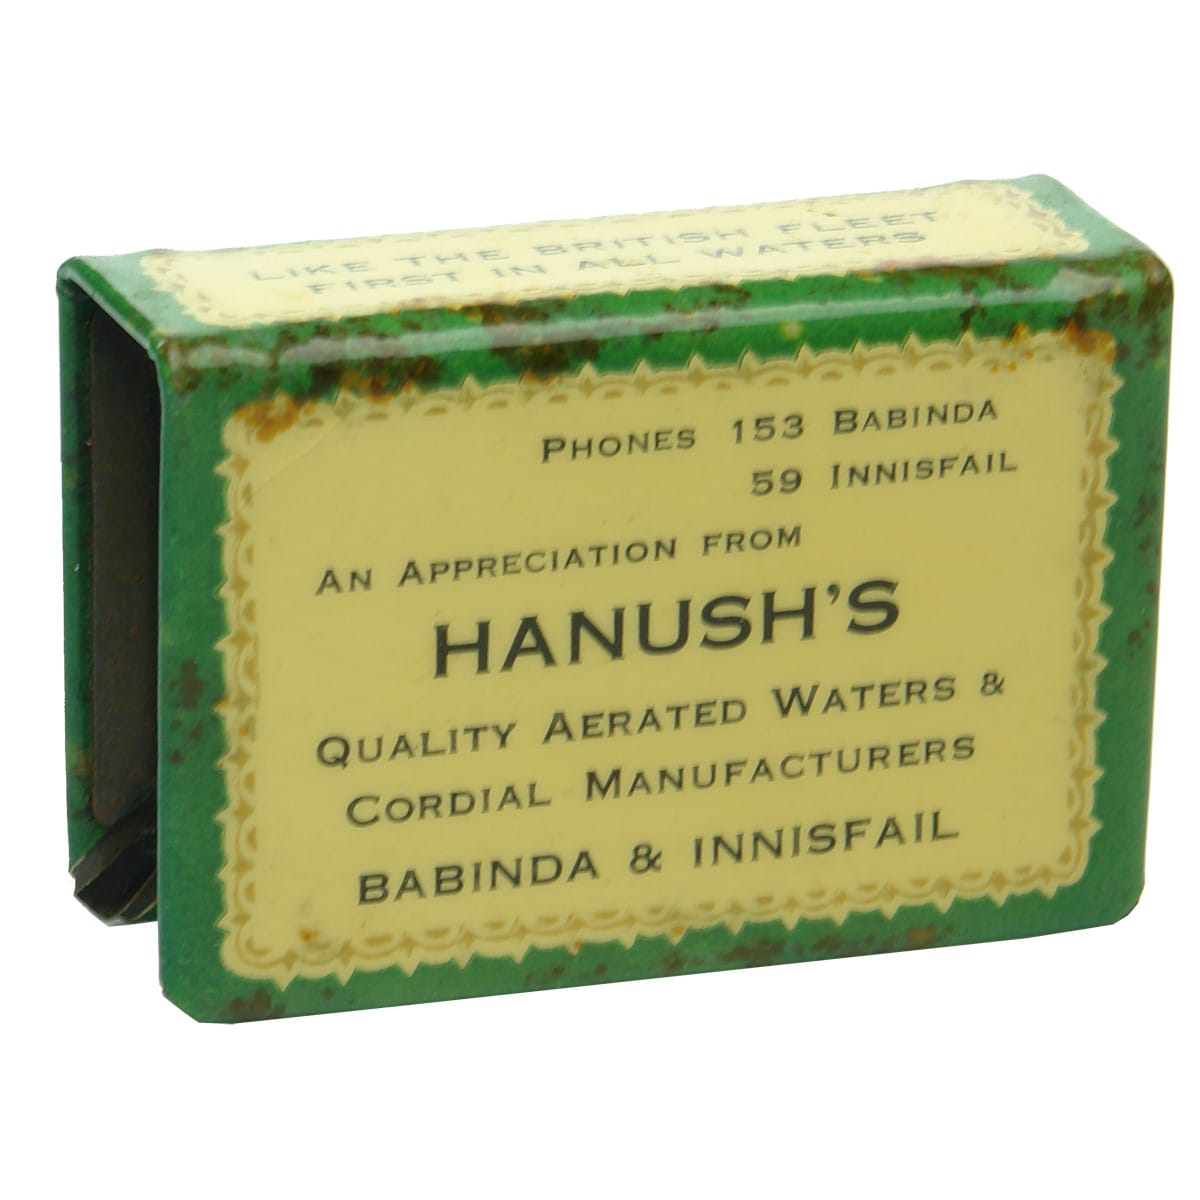 Advertising Match Box Holder. Hanush's Aerated Waters, Babinda & Innisfail. (Queensland)